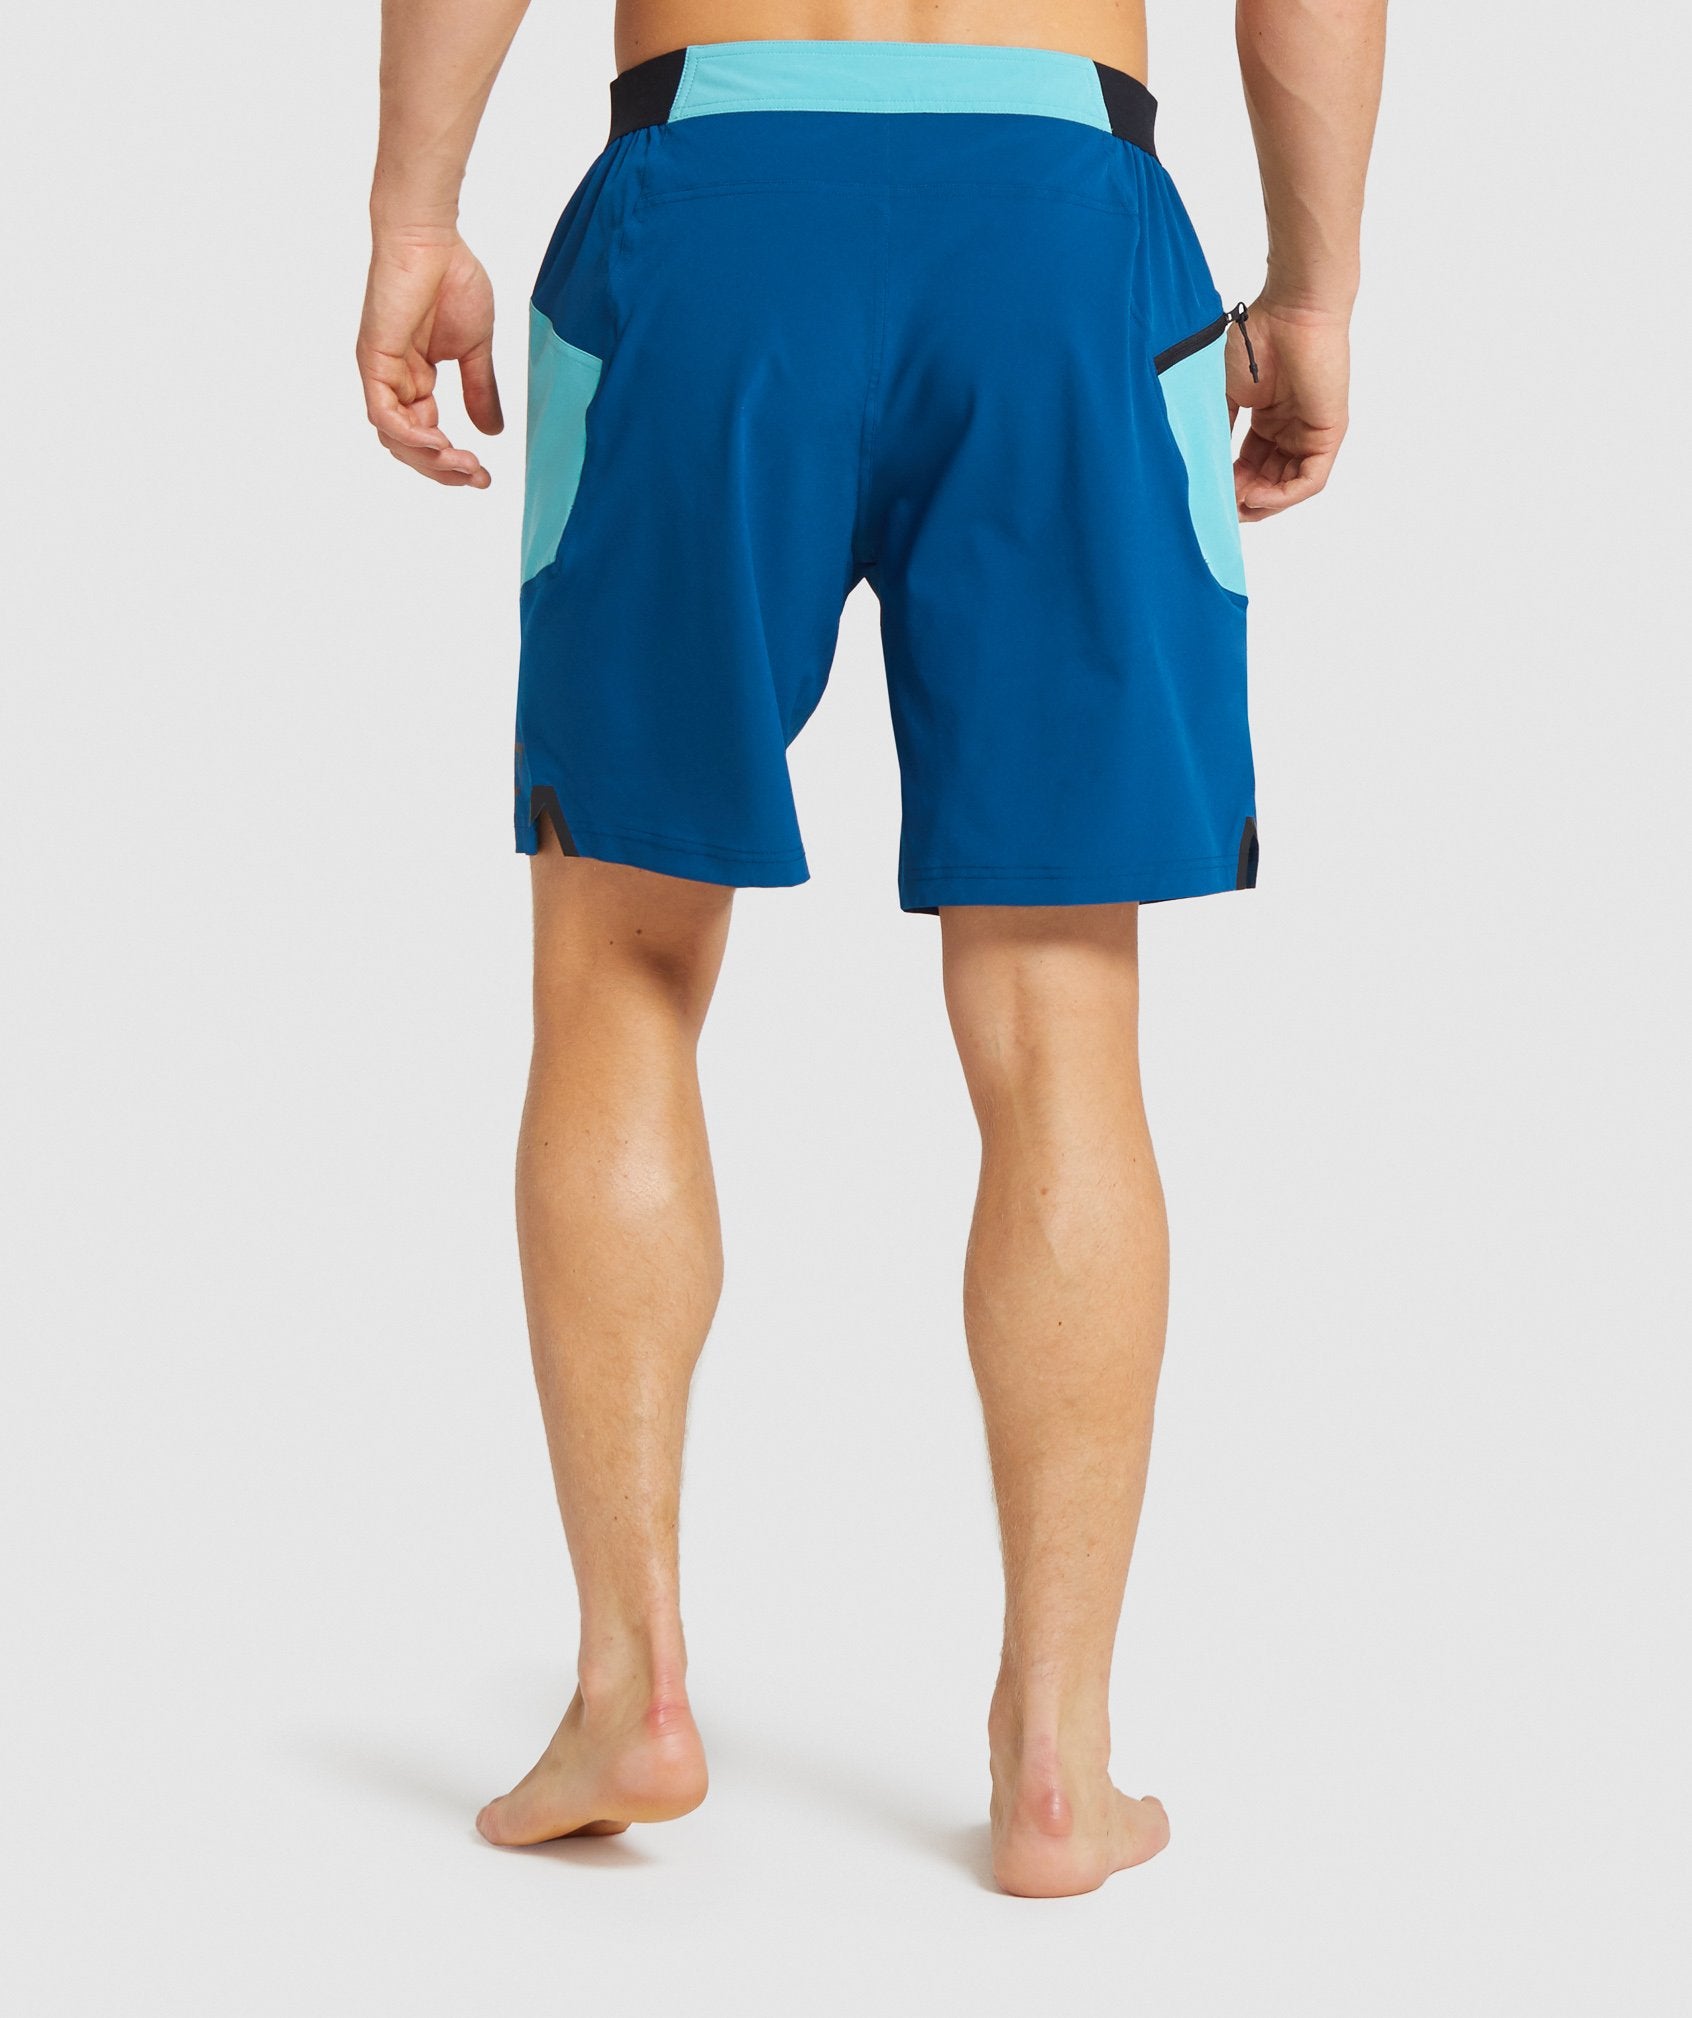 Swim Board Shorts in Aqua Green/Petrol Blue